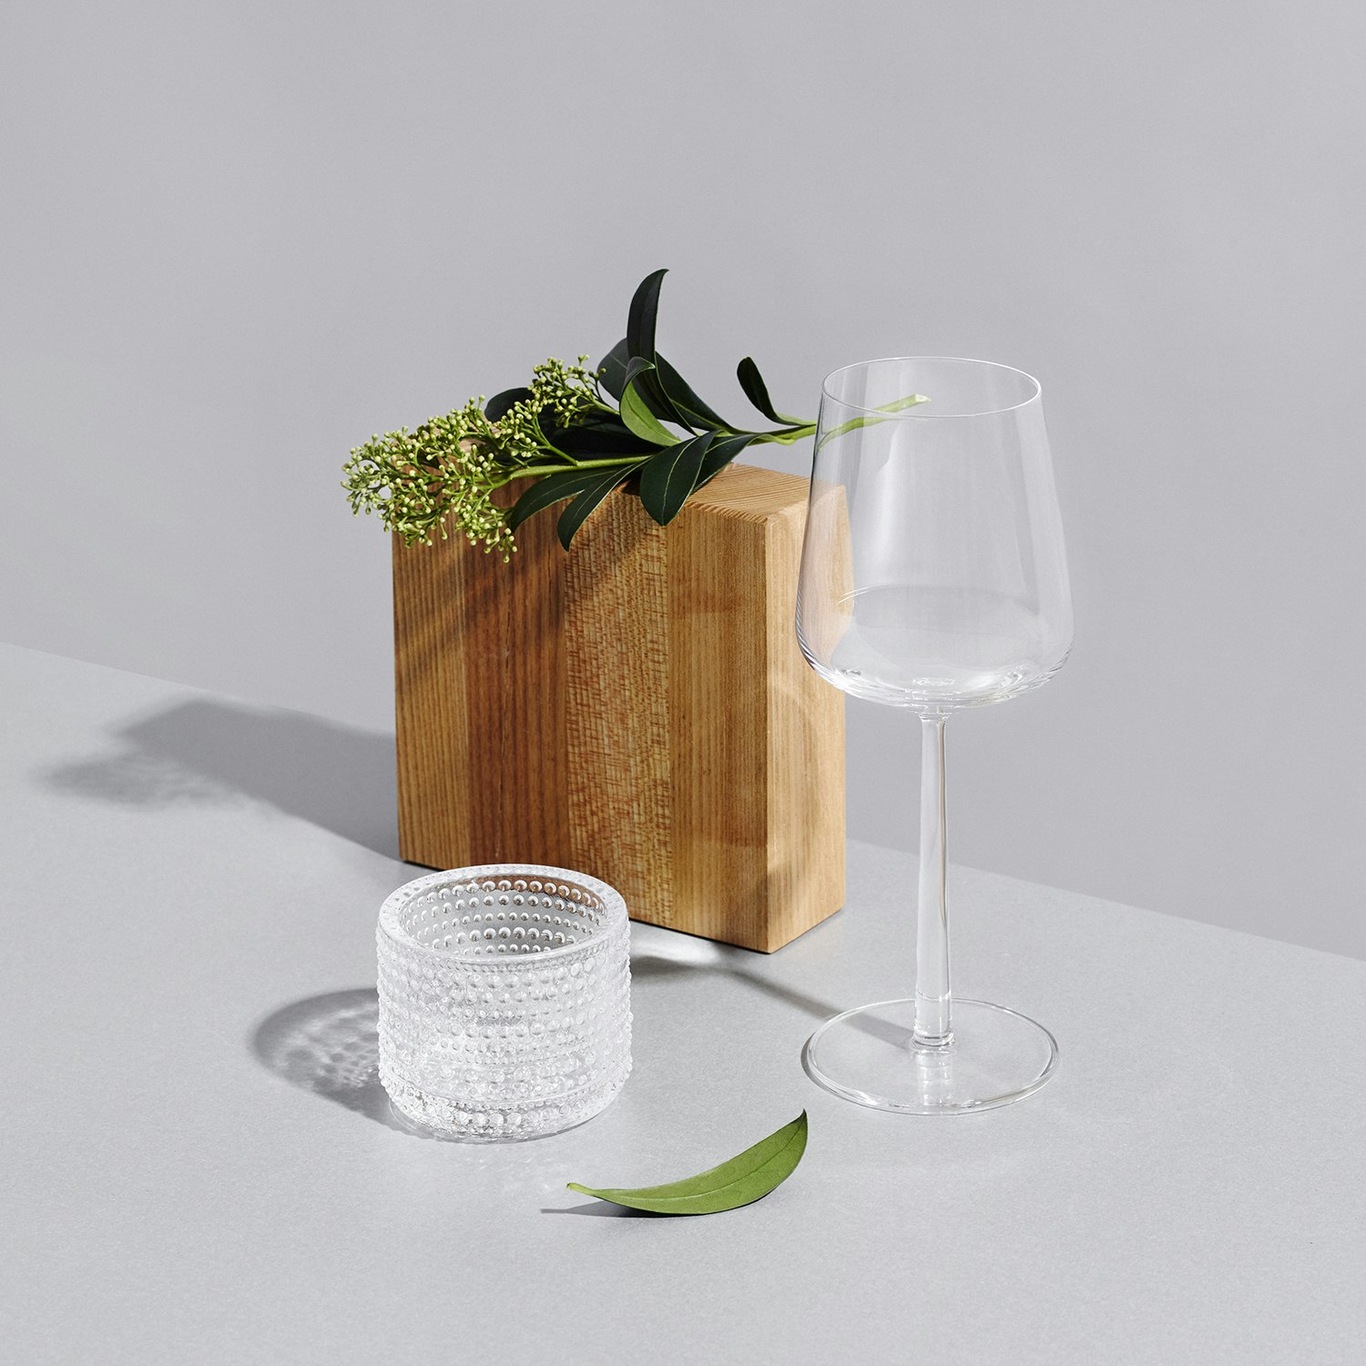 Essence Red Wine Glass 45 cl 2 pcs - Iittala @ RoyalDesign